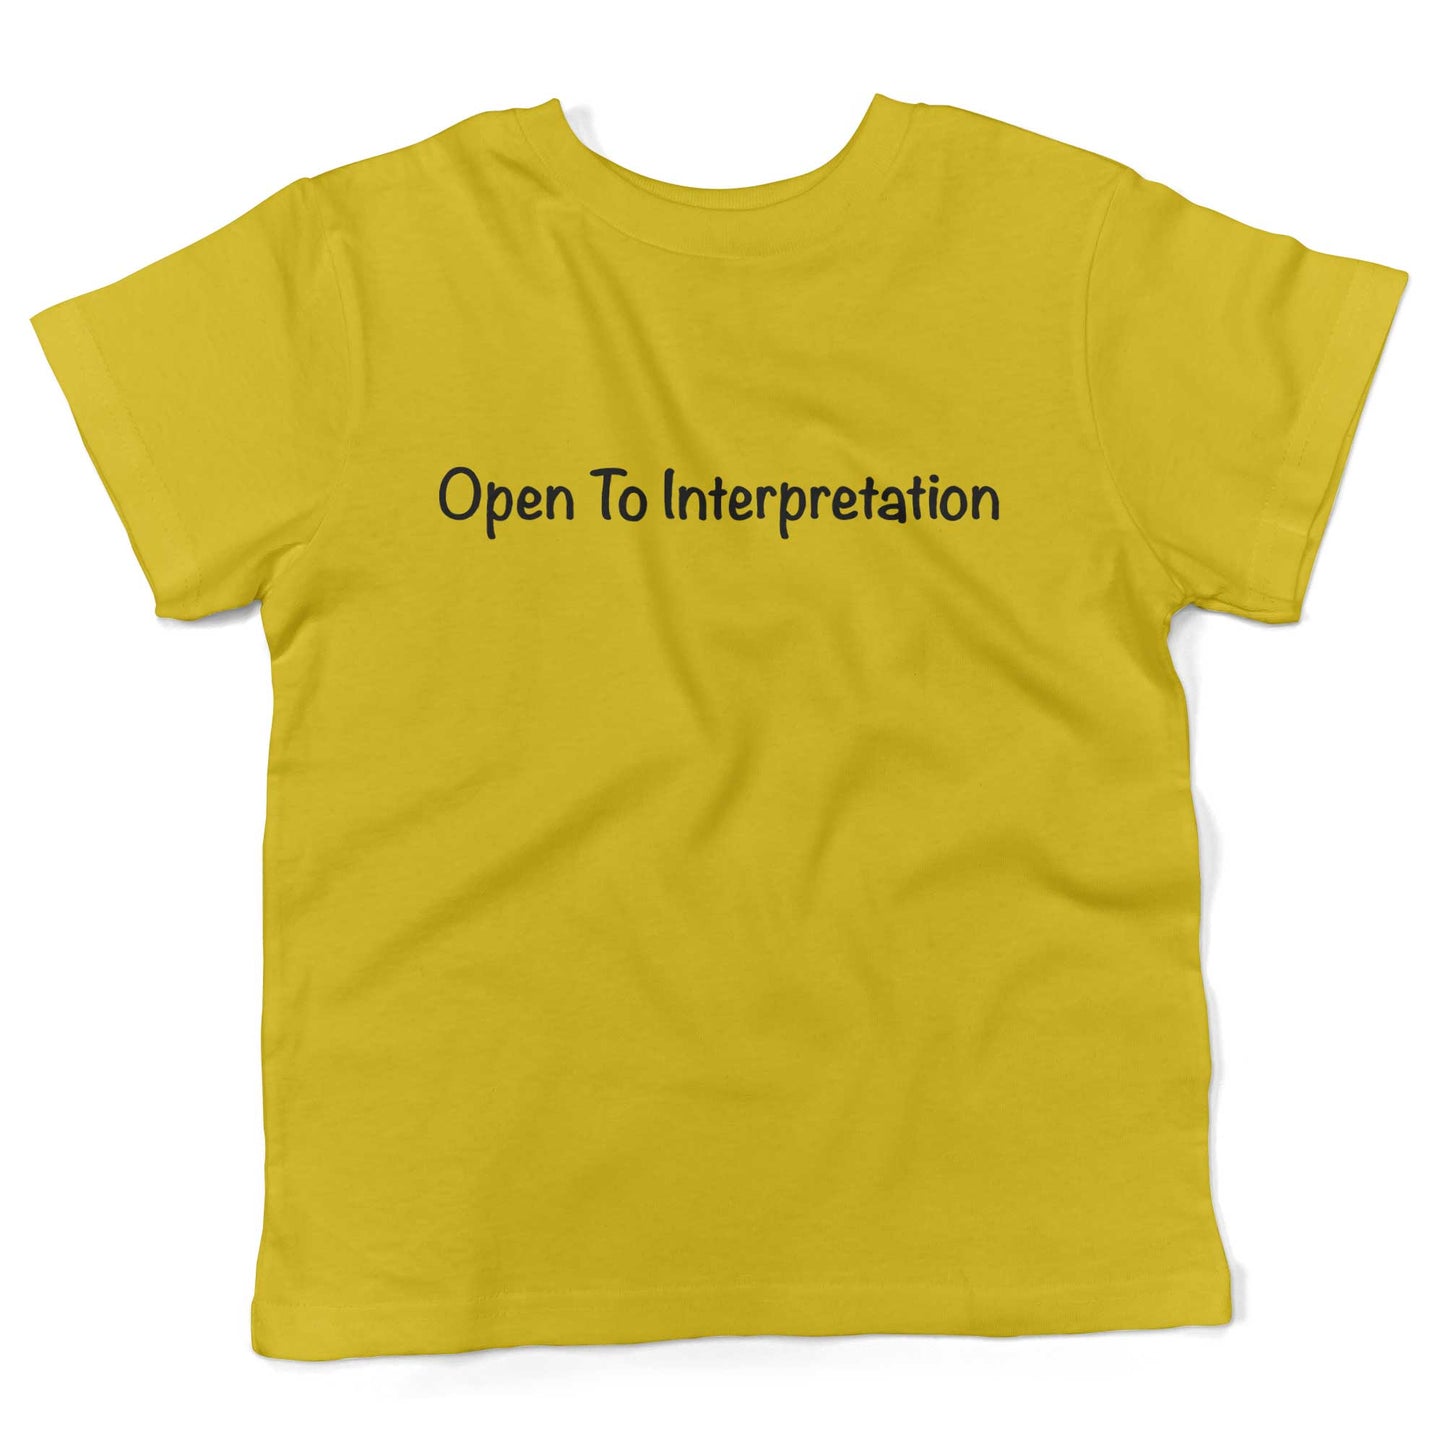 Open To Interpretation Toddler Shirt-Sunshine Yellow-2T